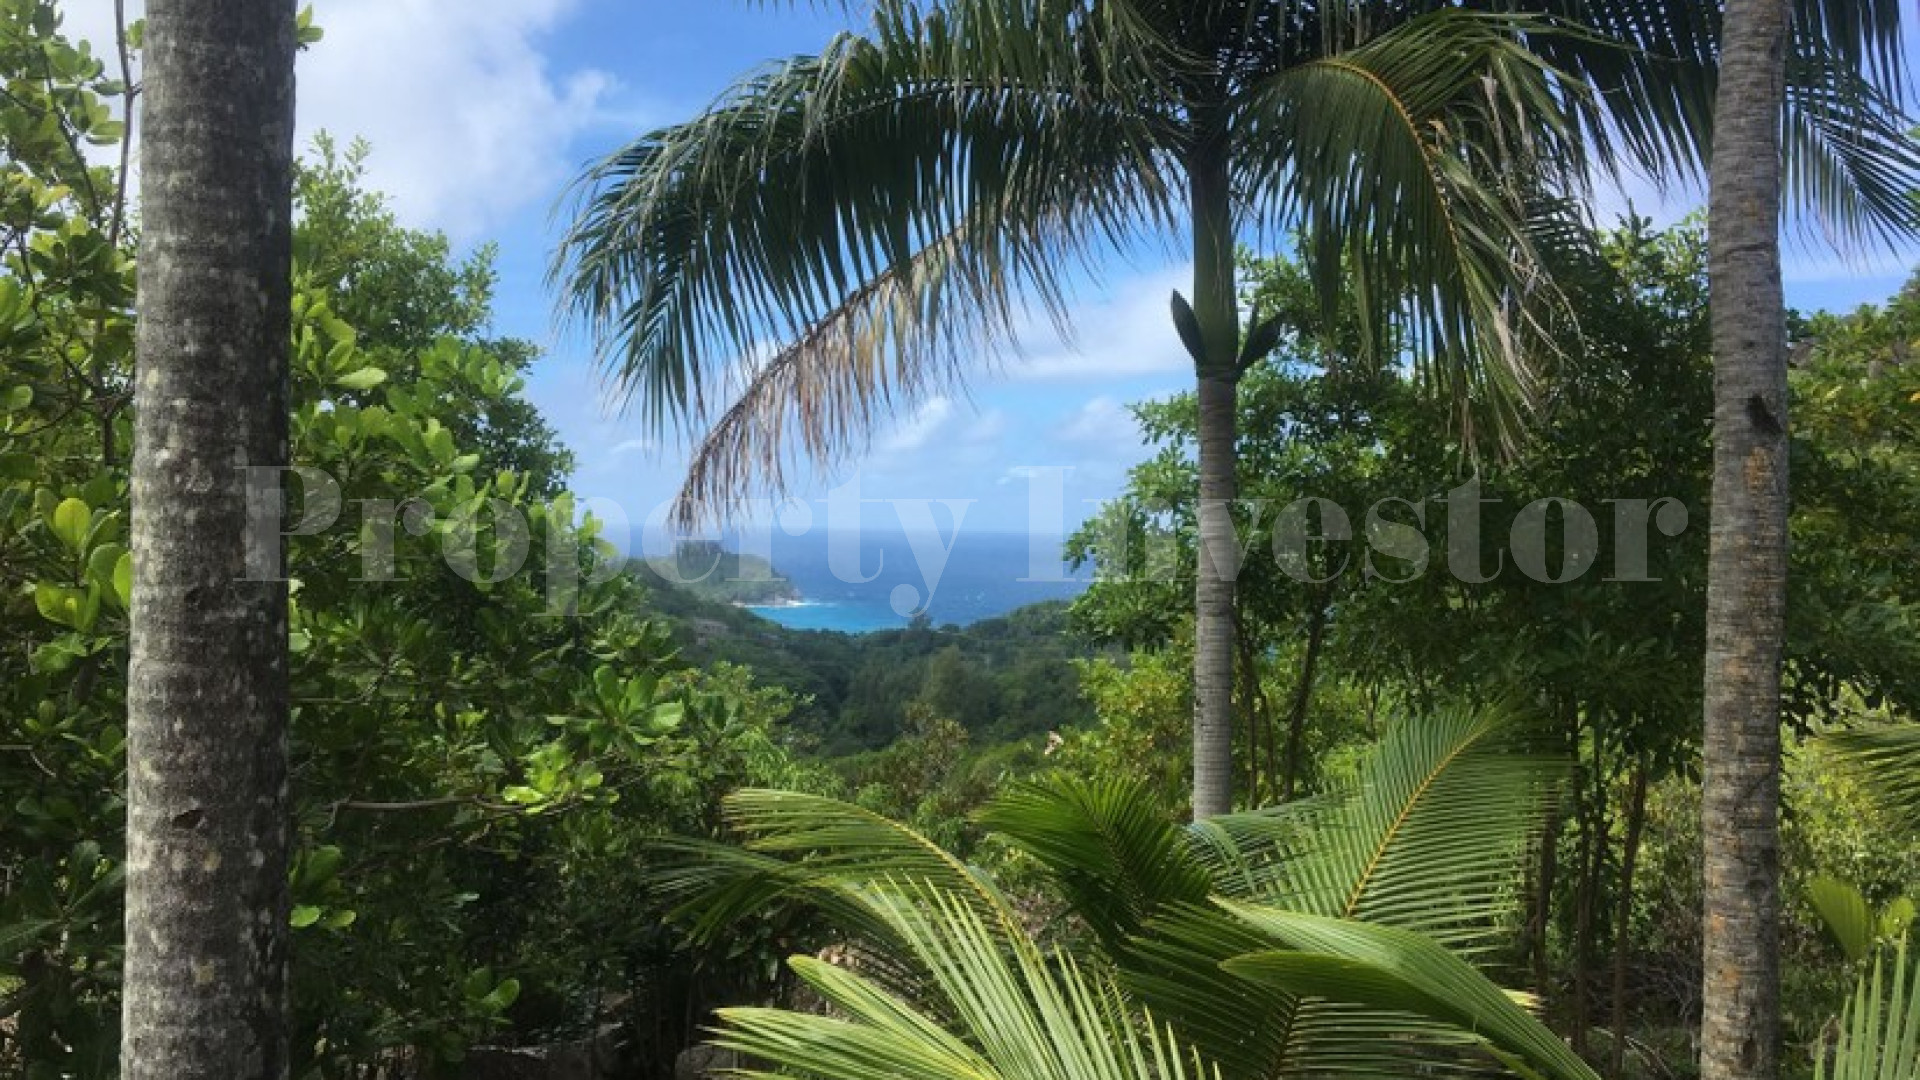 Участок земли 36,8 соток с потрясающим видом на море на о.Ла-Диг, Сейшелы